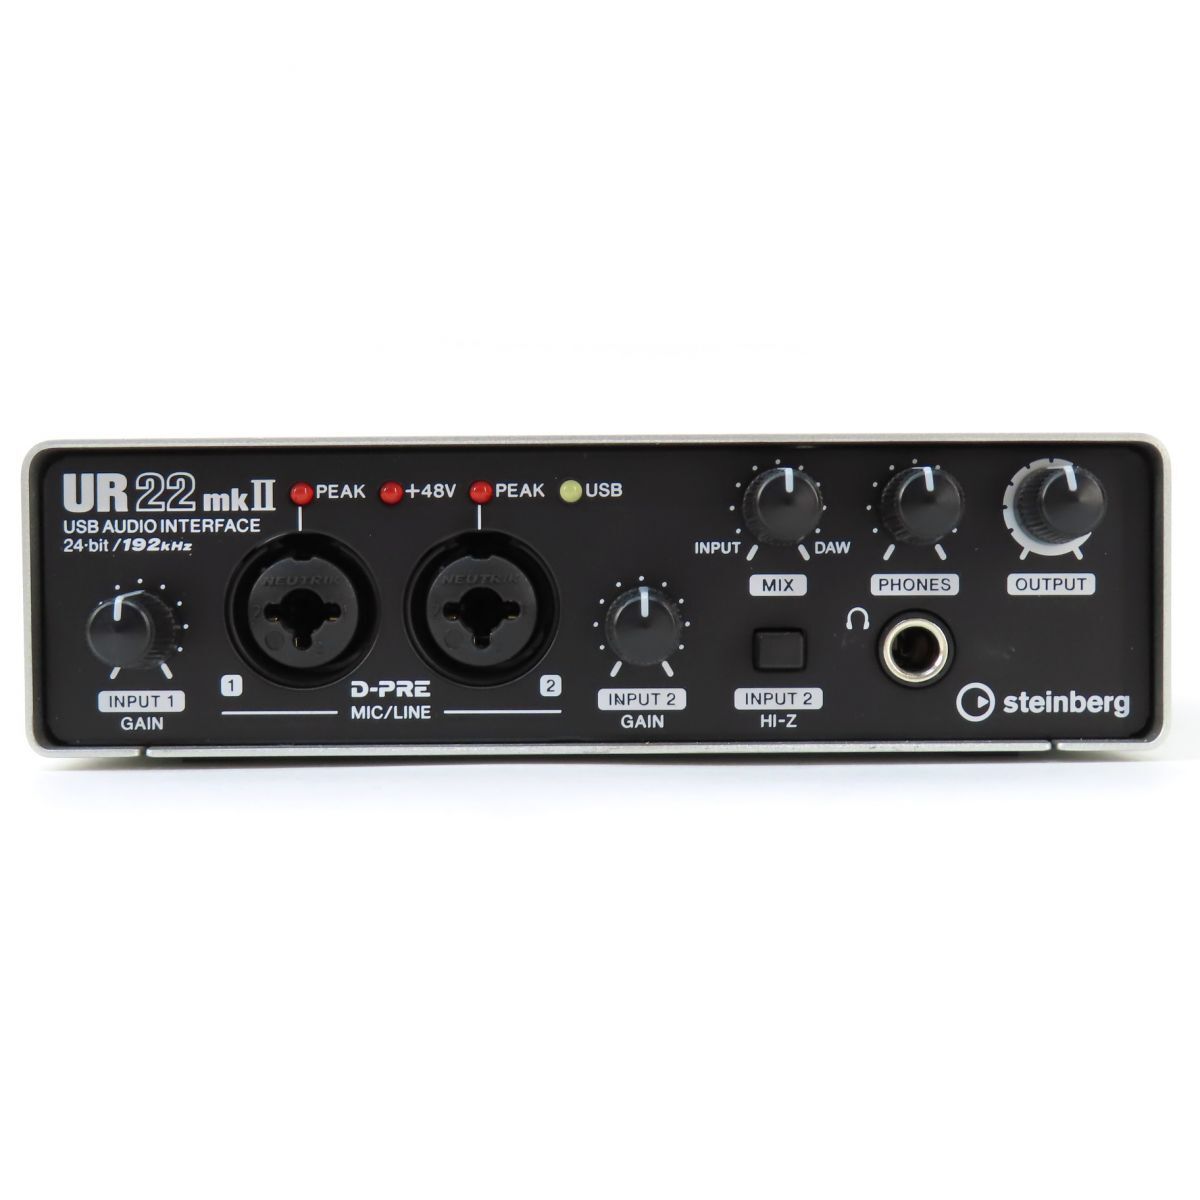 095s*Steinberg старт Inver gUR22 mkII аудио интерфейс USB модель * б/у 